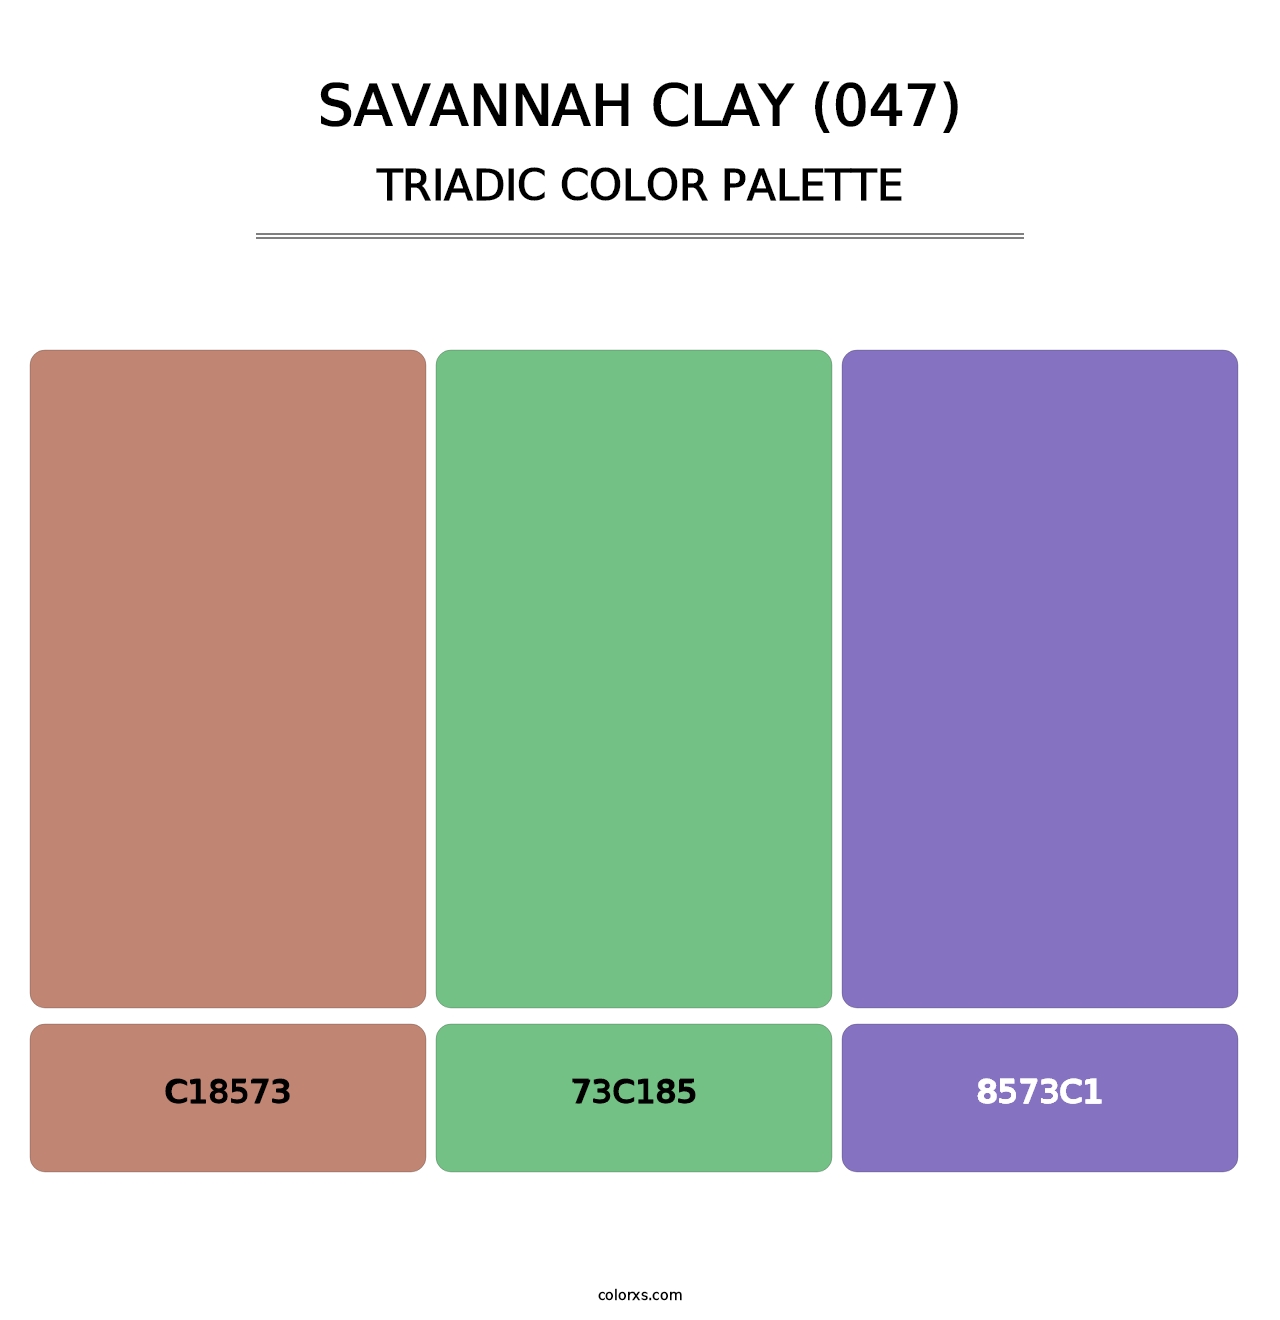 Savannah Clay (047) - Triadic Color Palette